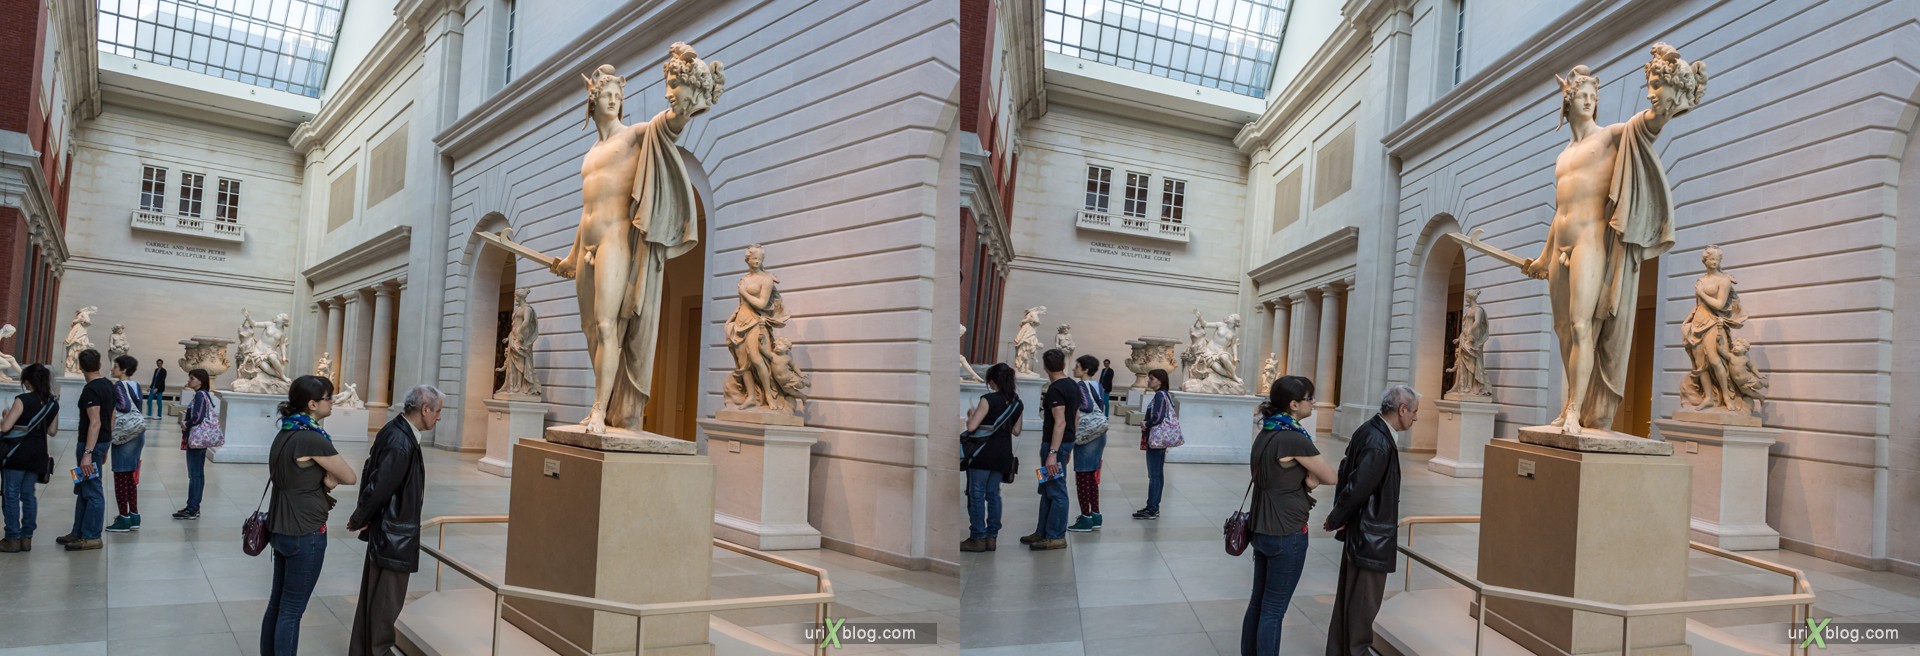 2013, Metropolitan Museum of Art, NYC, New York City, USA, 3D, stereo pair, cross-eyed, crossview, cross view stereo pair, stereoscopic